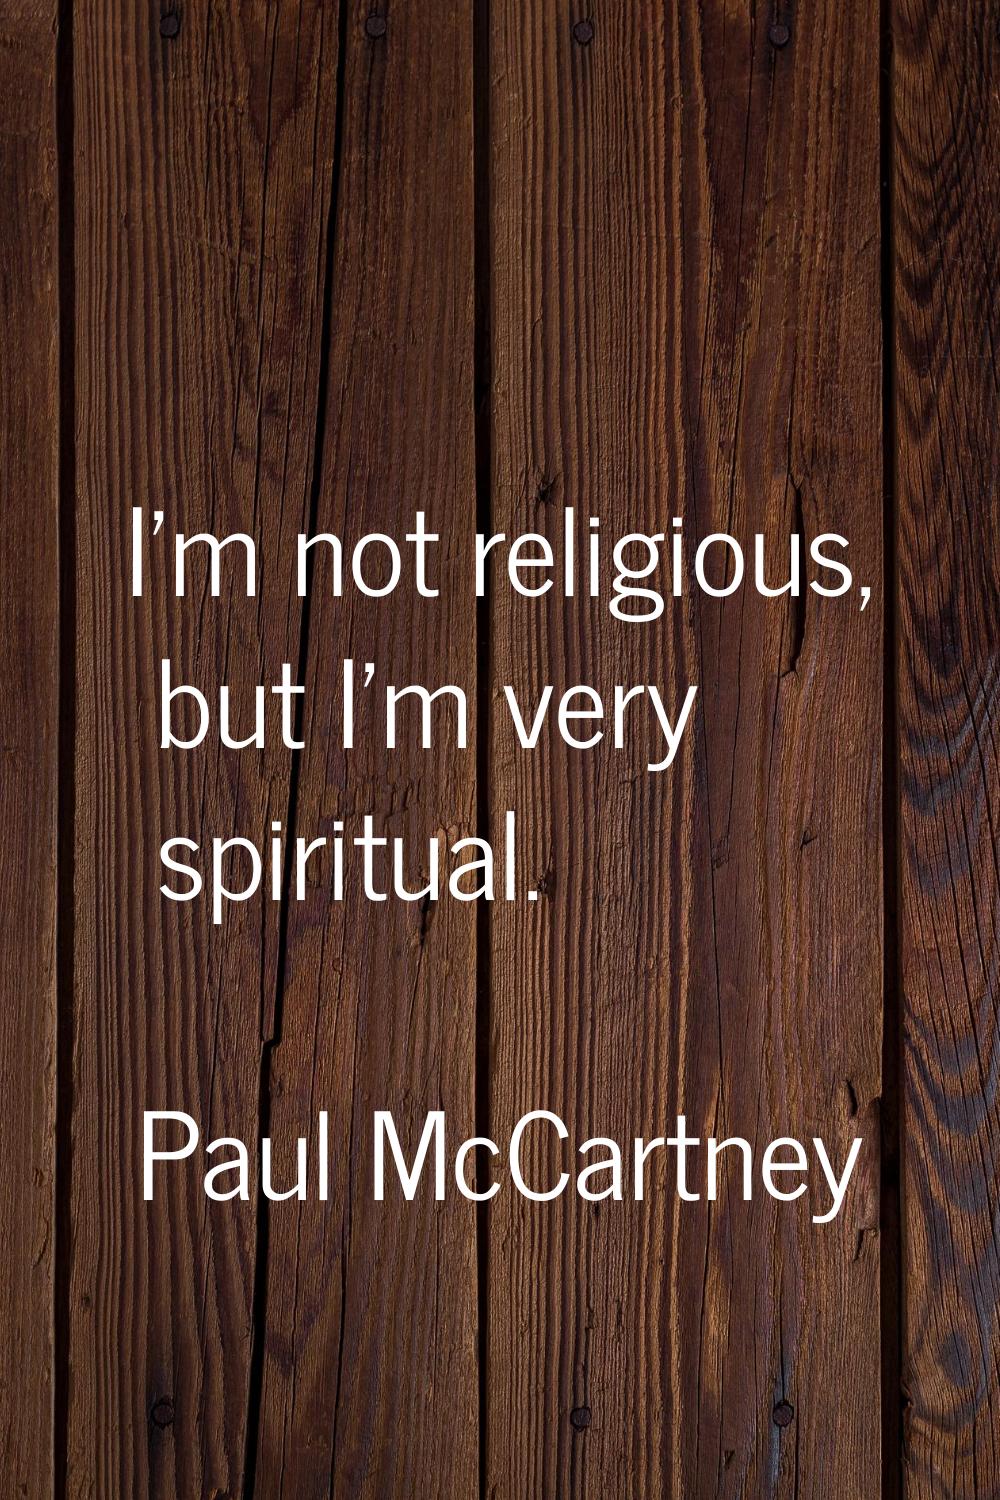 I'm not religious, but I'm very spiritual.